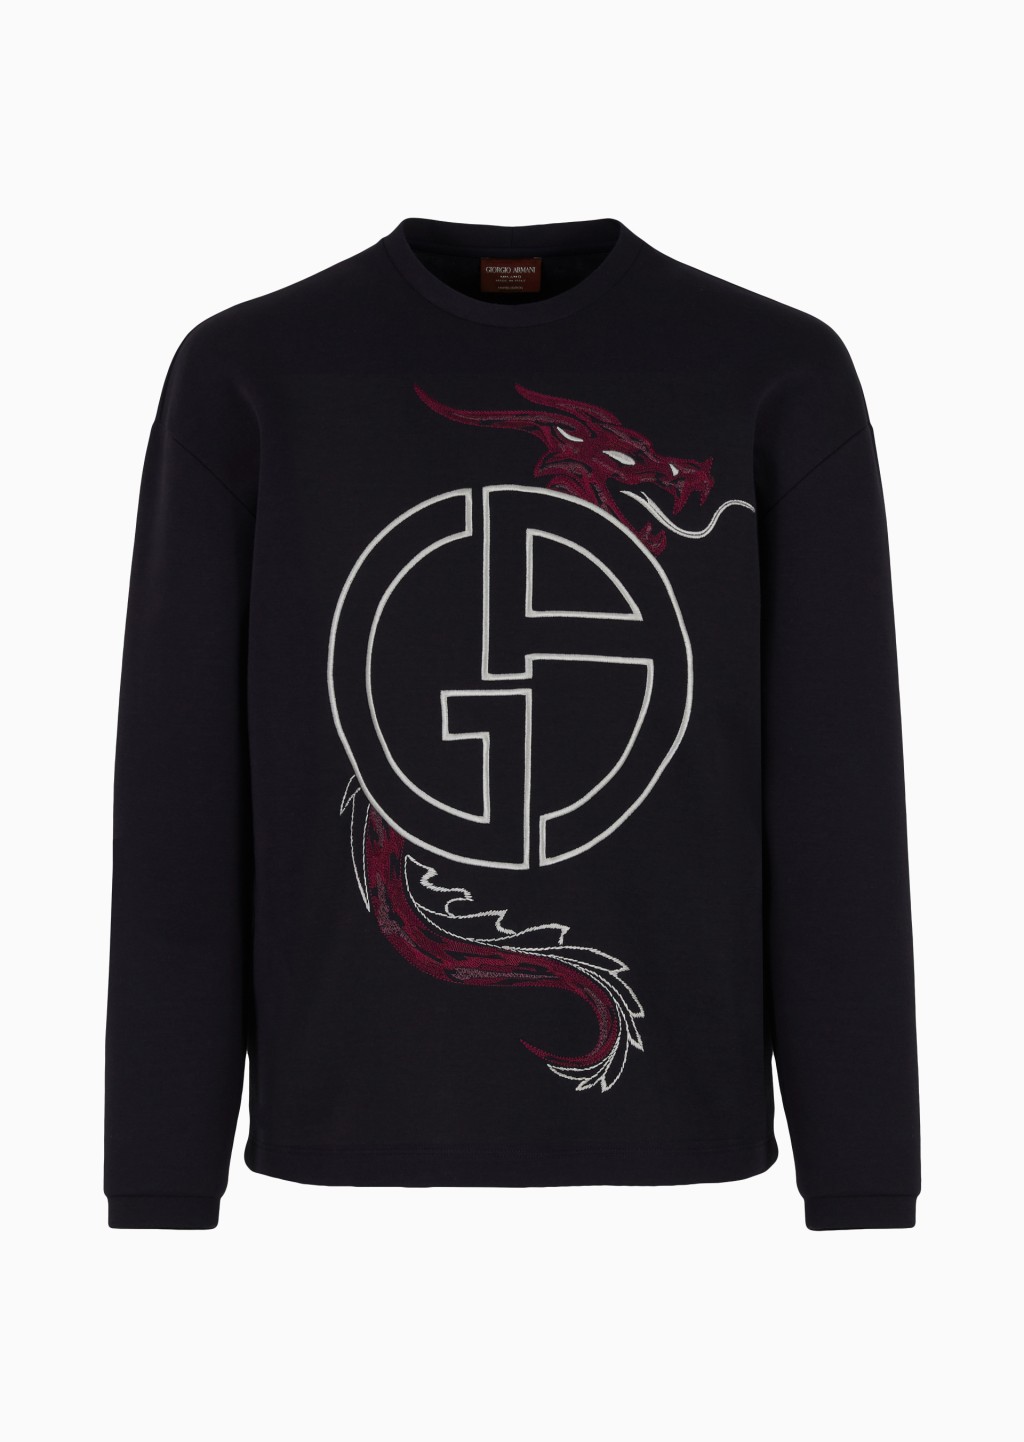 Giorgio Armani农历新年系列黑色男装卫衣，结合品牌Logo与生肖龙的图案是焦点设计。